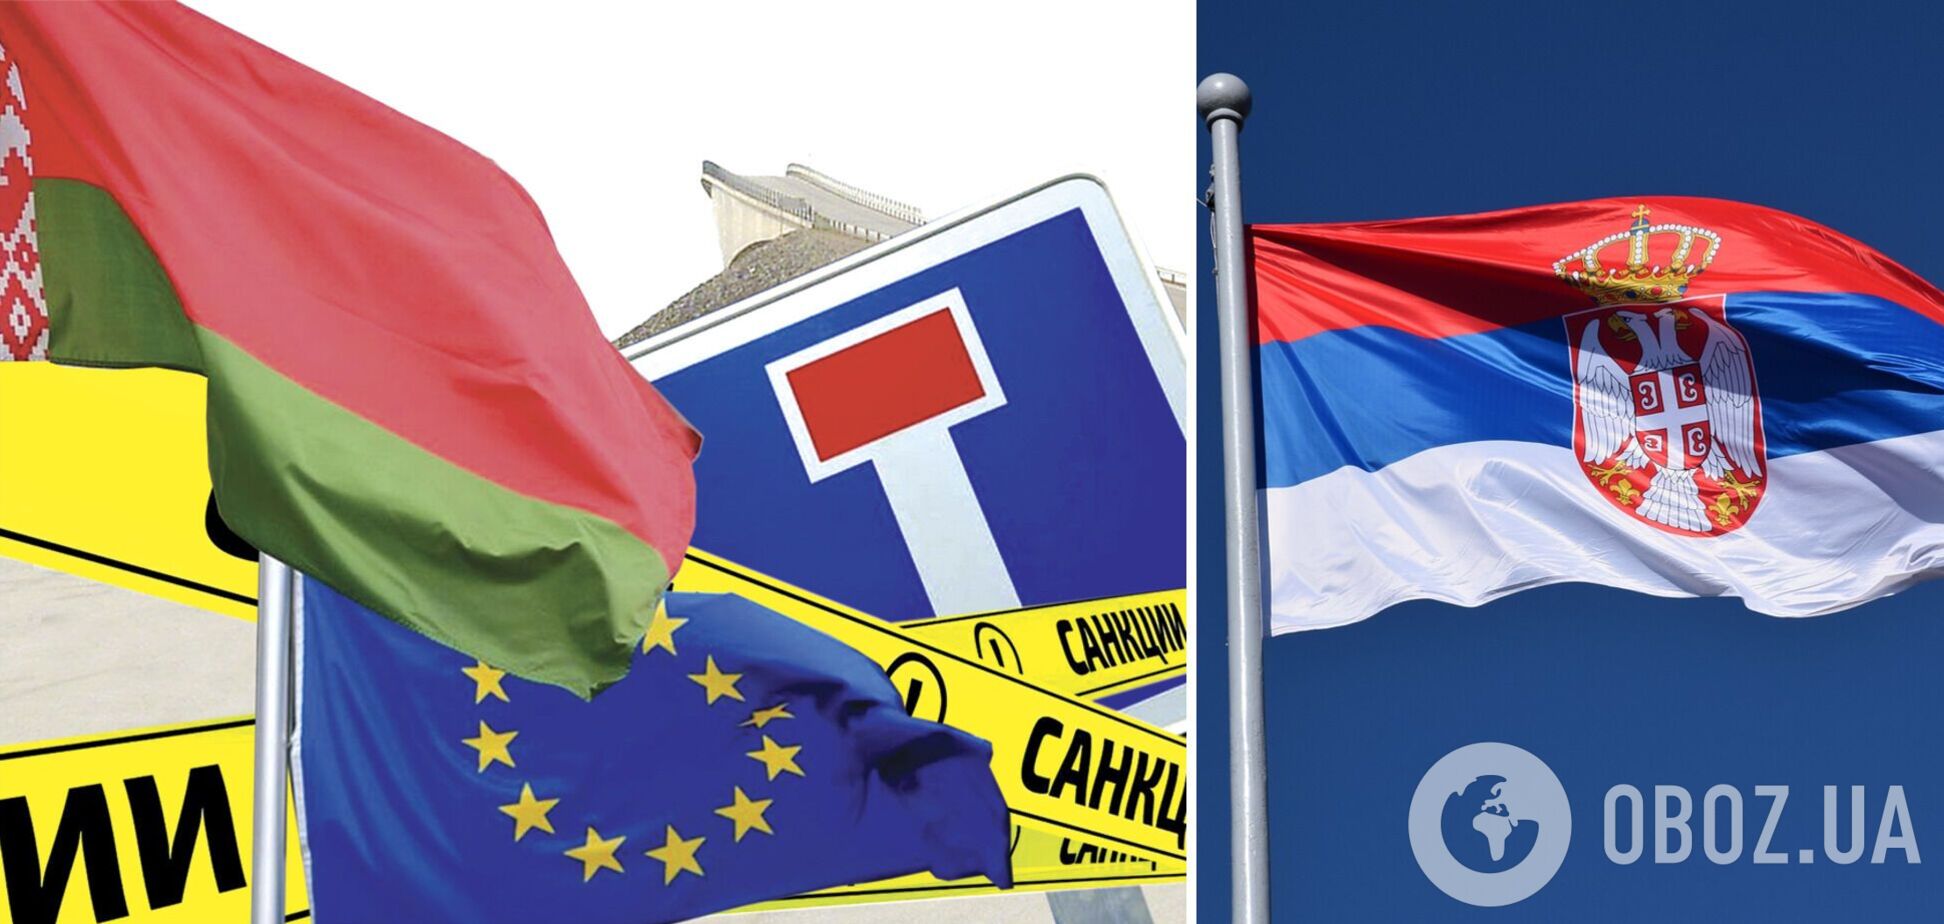 Сербия ввела санкции проти Беларуси: детали решения